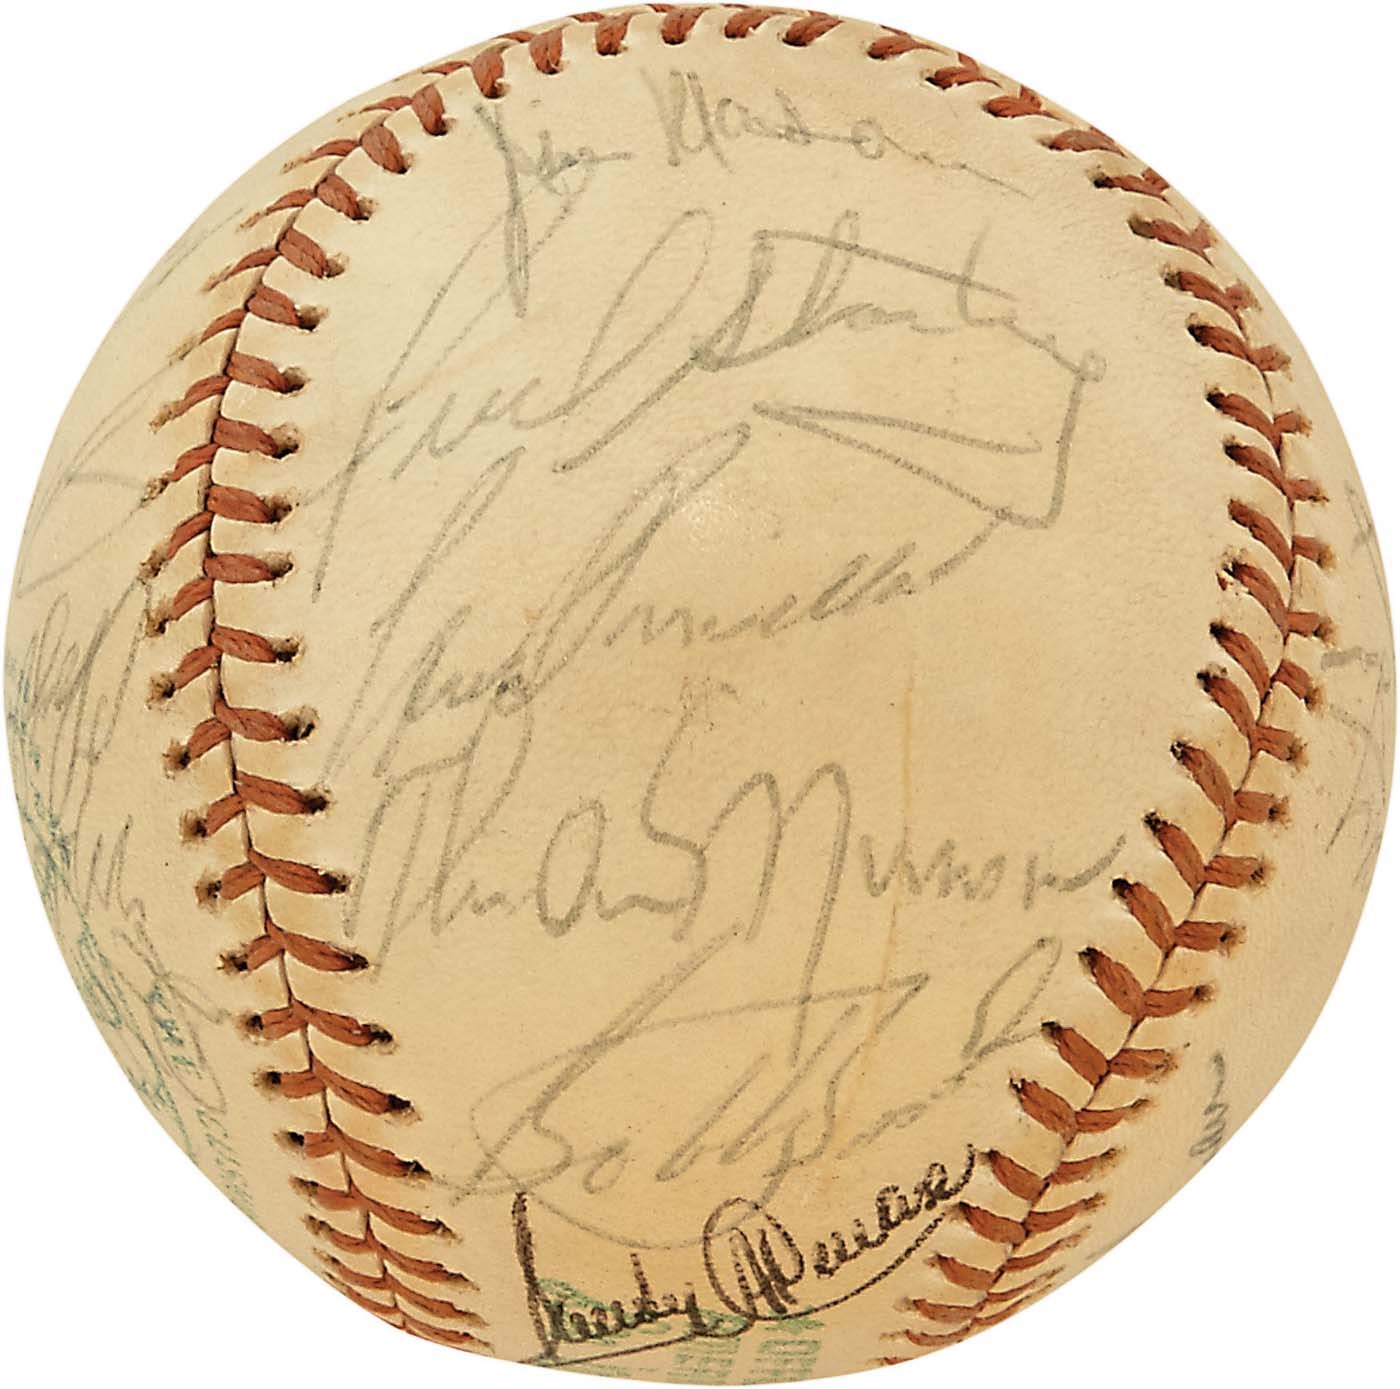 NY Yankees, Giants & Mets - 1975 New York Yankees Team-Signed Baseball with Thurman Munson (PSA)